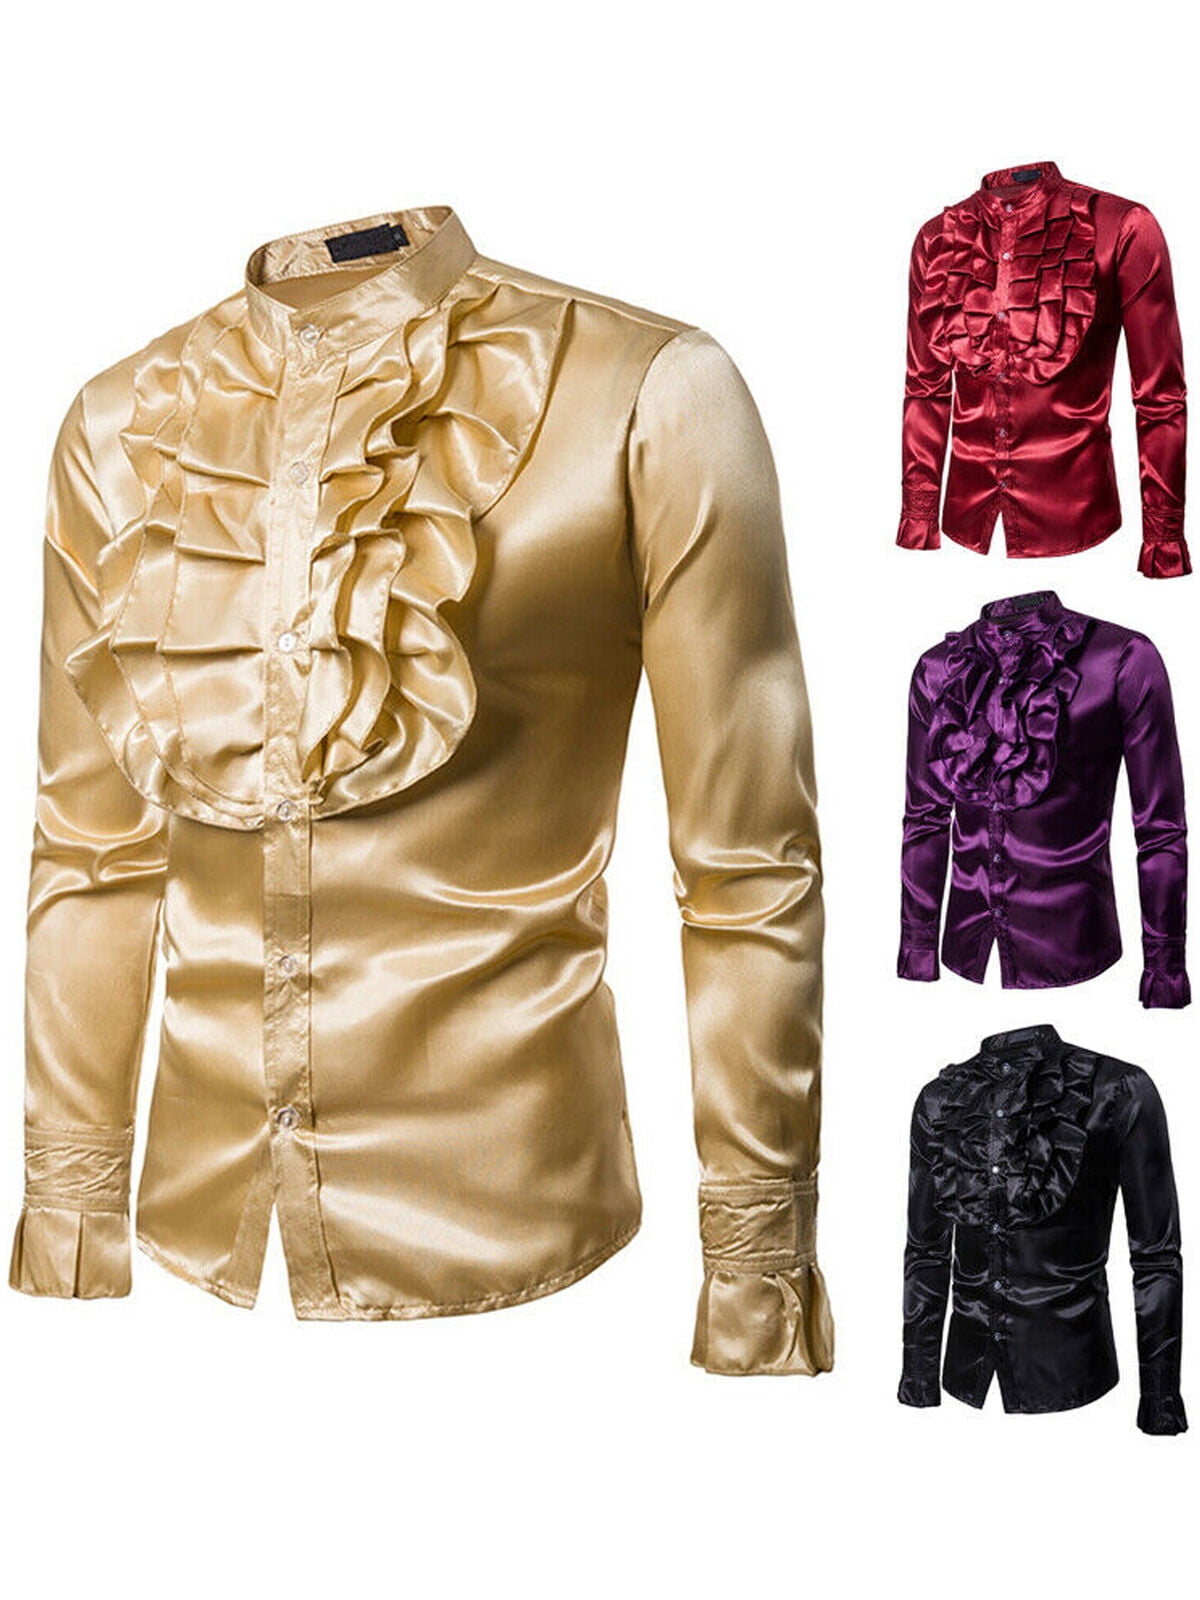 Ruewey - US Men's Luxury Silky Fancy Stage Dress Ruffle Collar Shirts ...